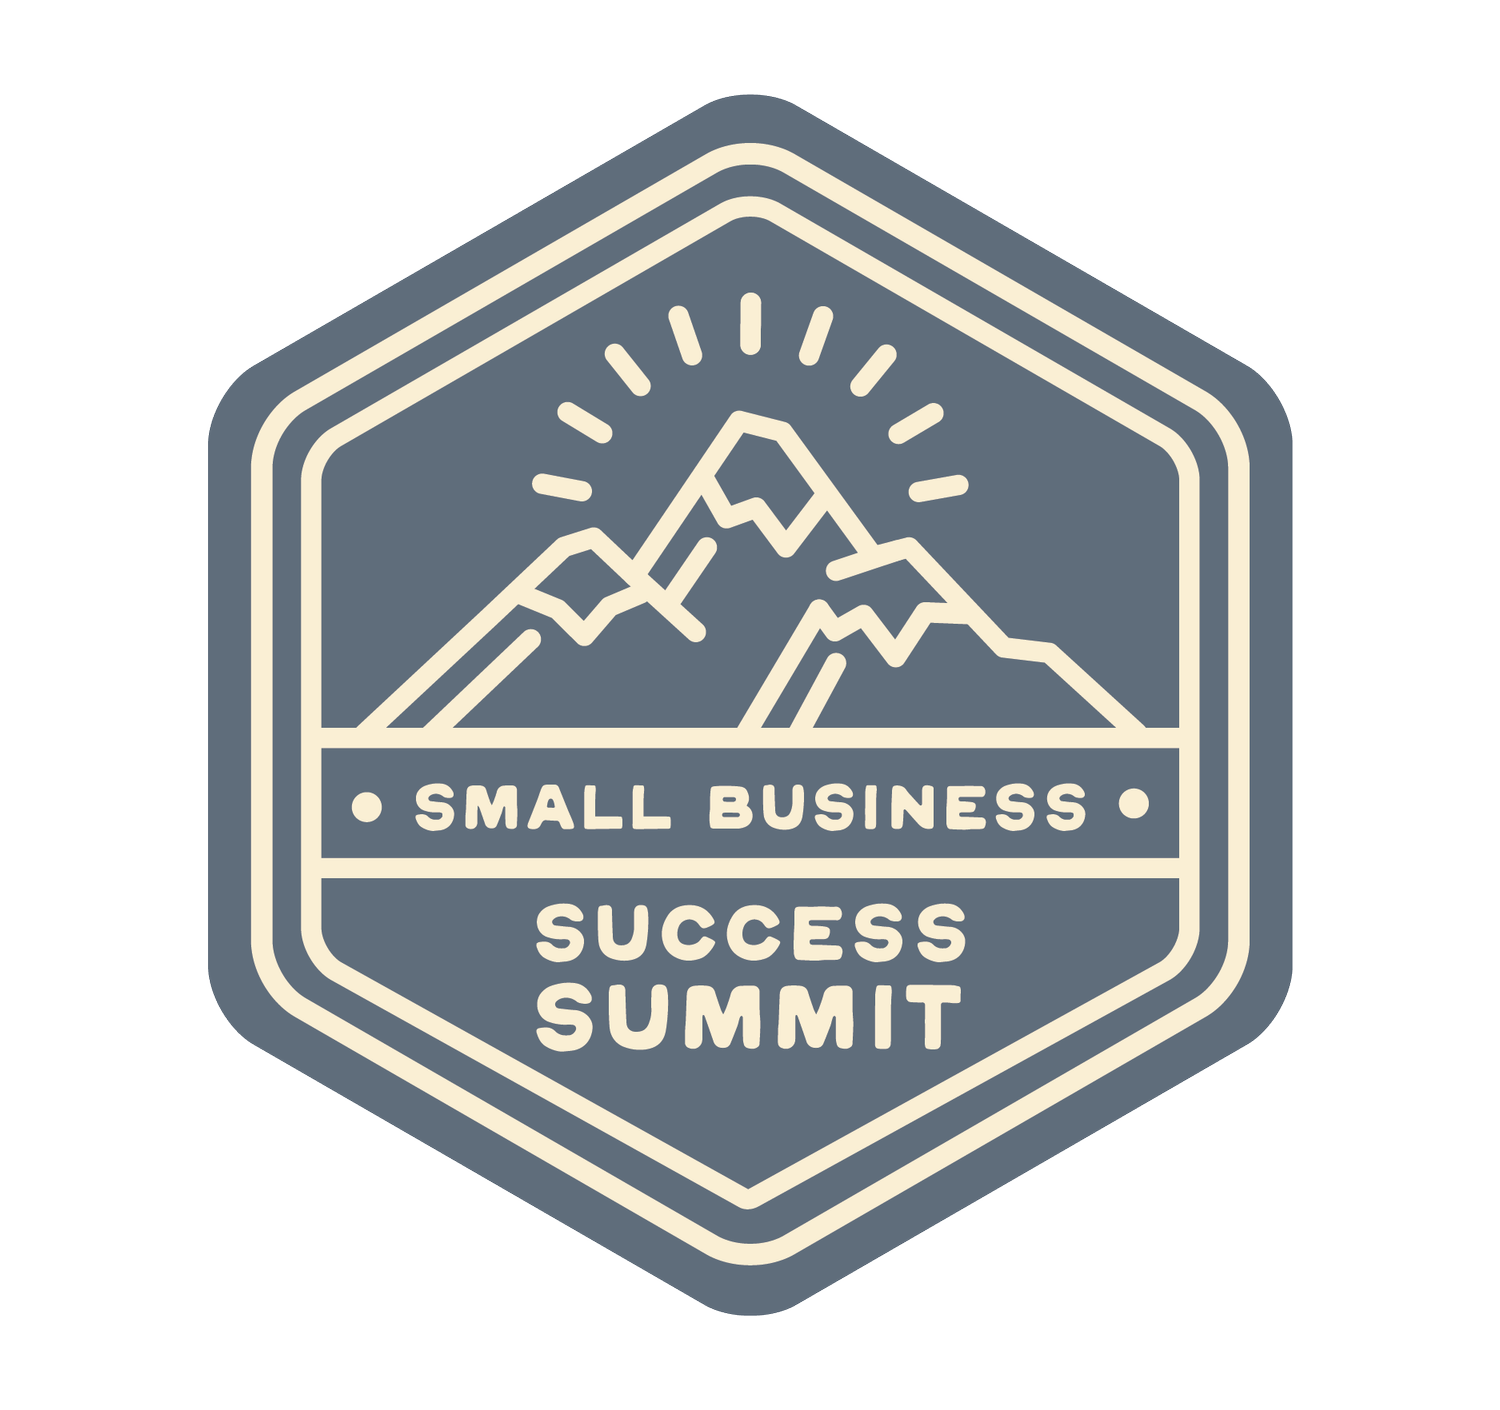 Small Business Success Summit